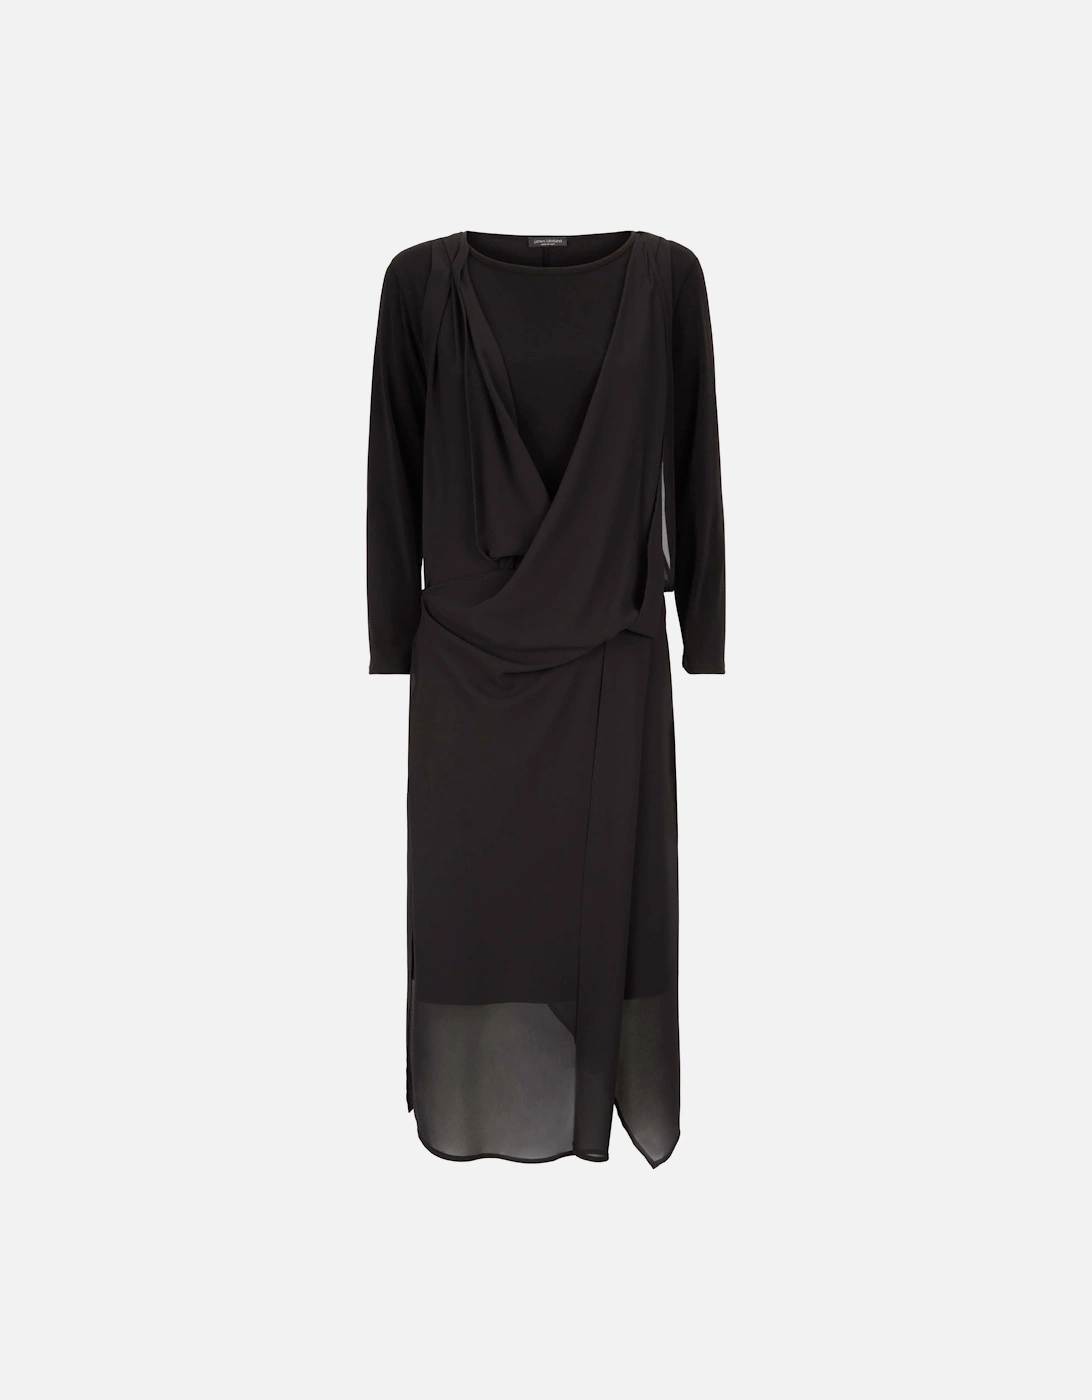 Layered V-Neck Chiffon Dress in Black